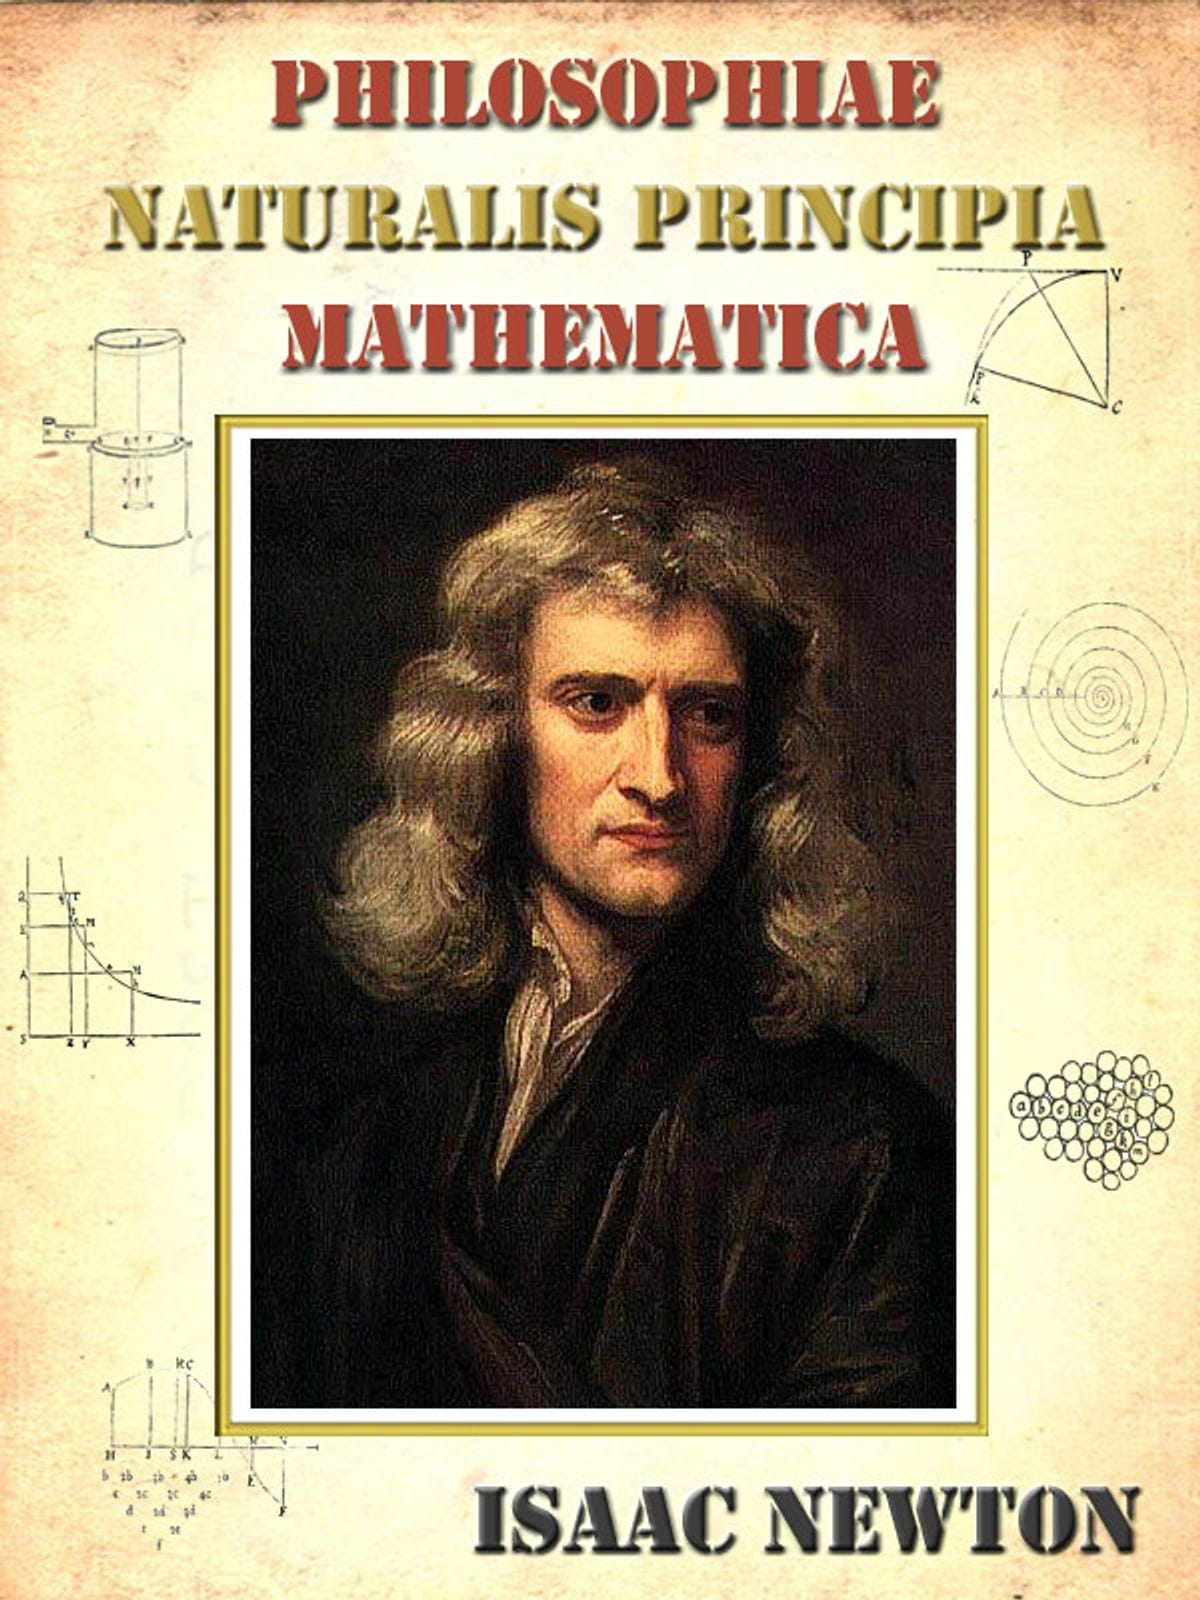 Philosophiae Naturalis Principia Mathematica by Isaac Newton (Latin)  [Annotated] eBook de Isaac Newton - EPUB Livro | Rakuten Kobo Brasil